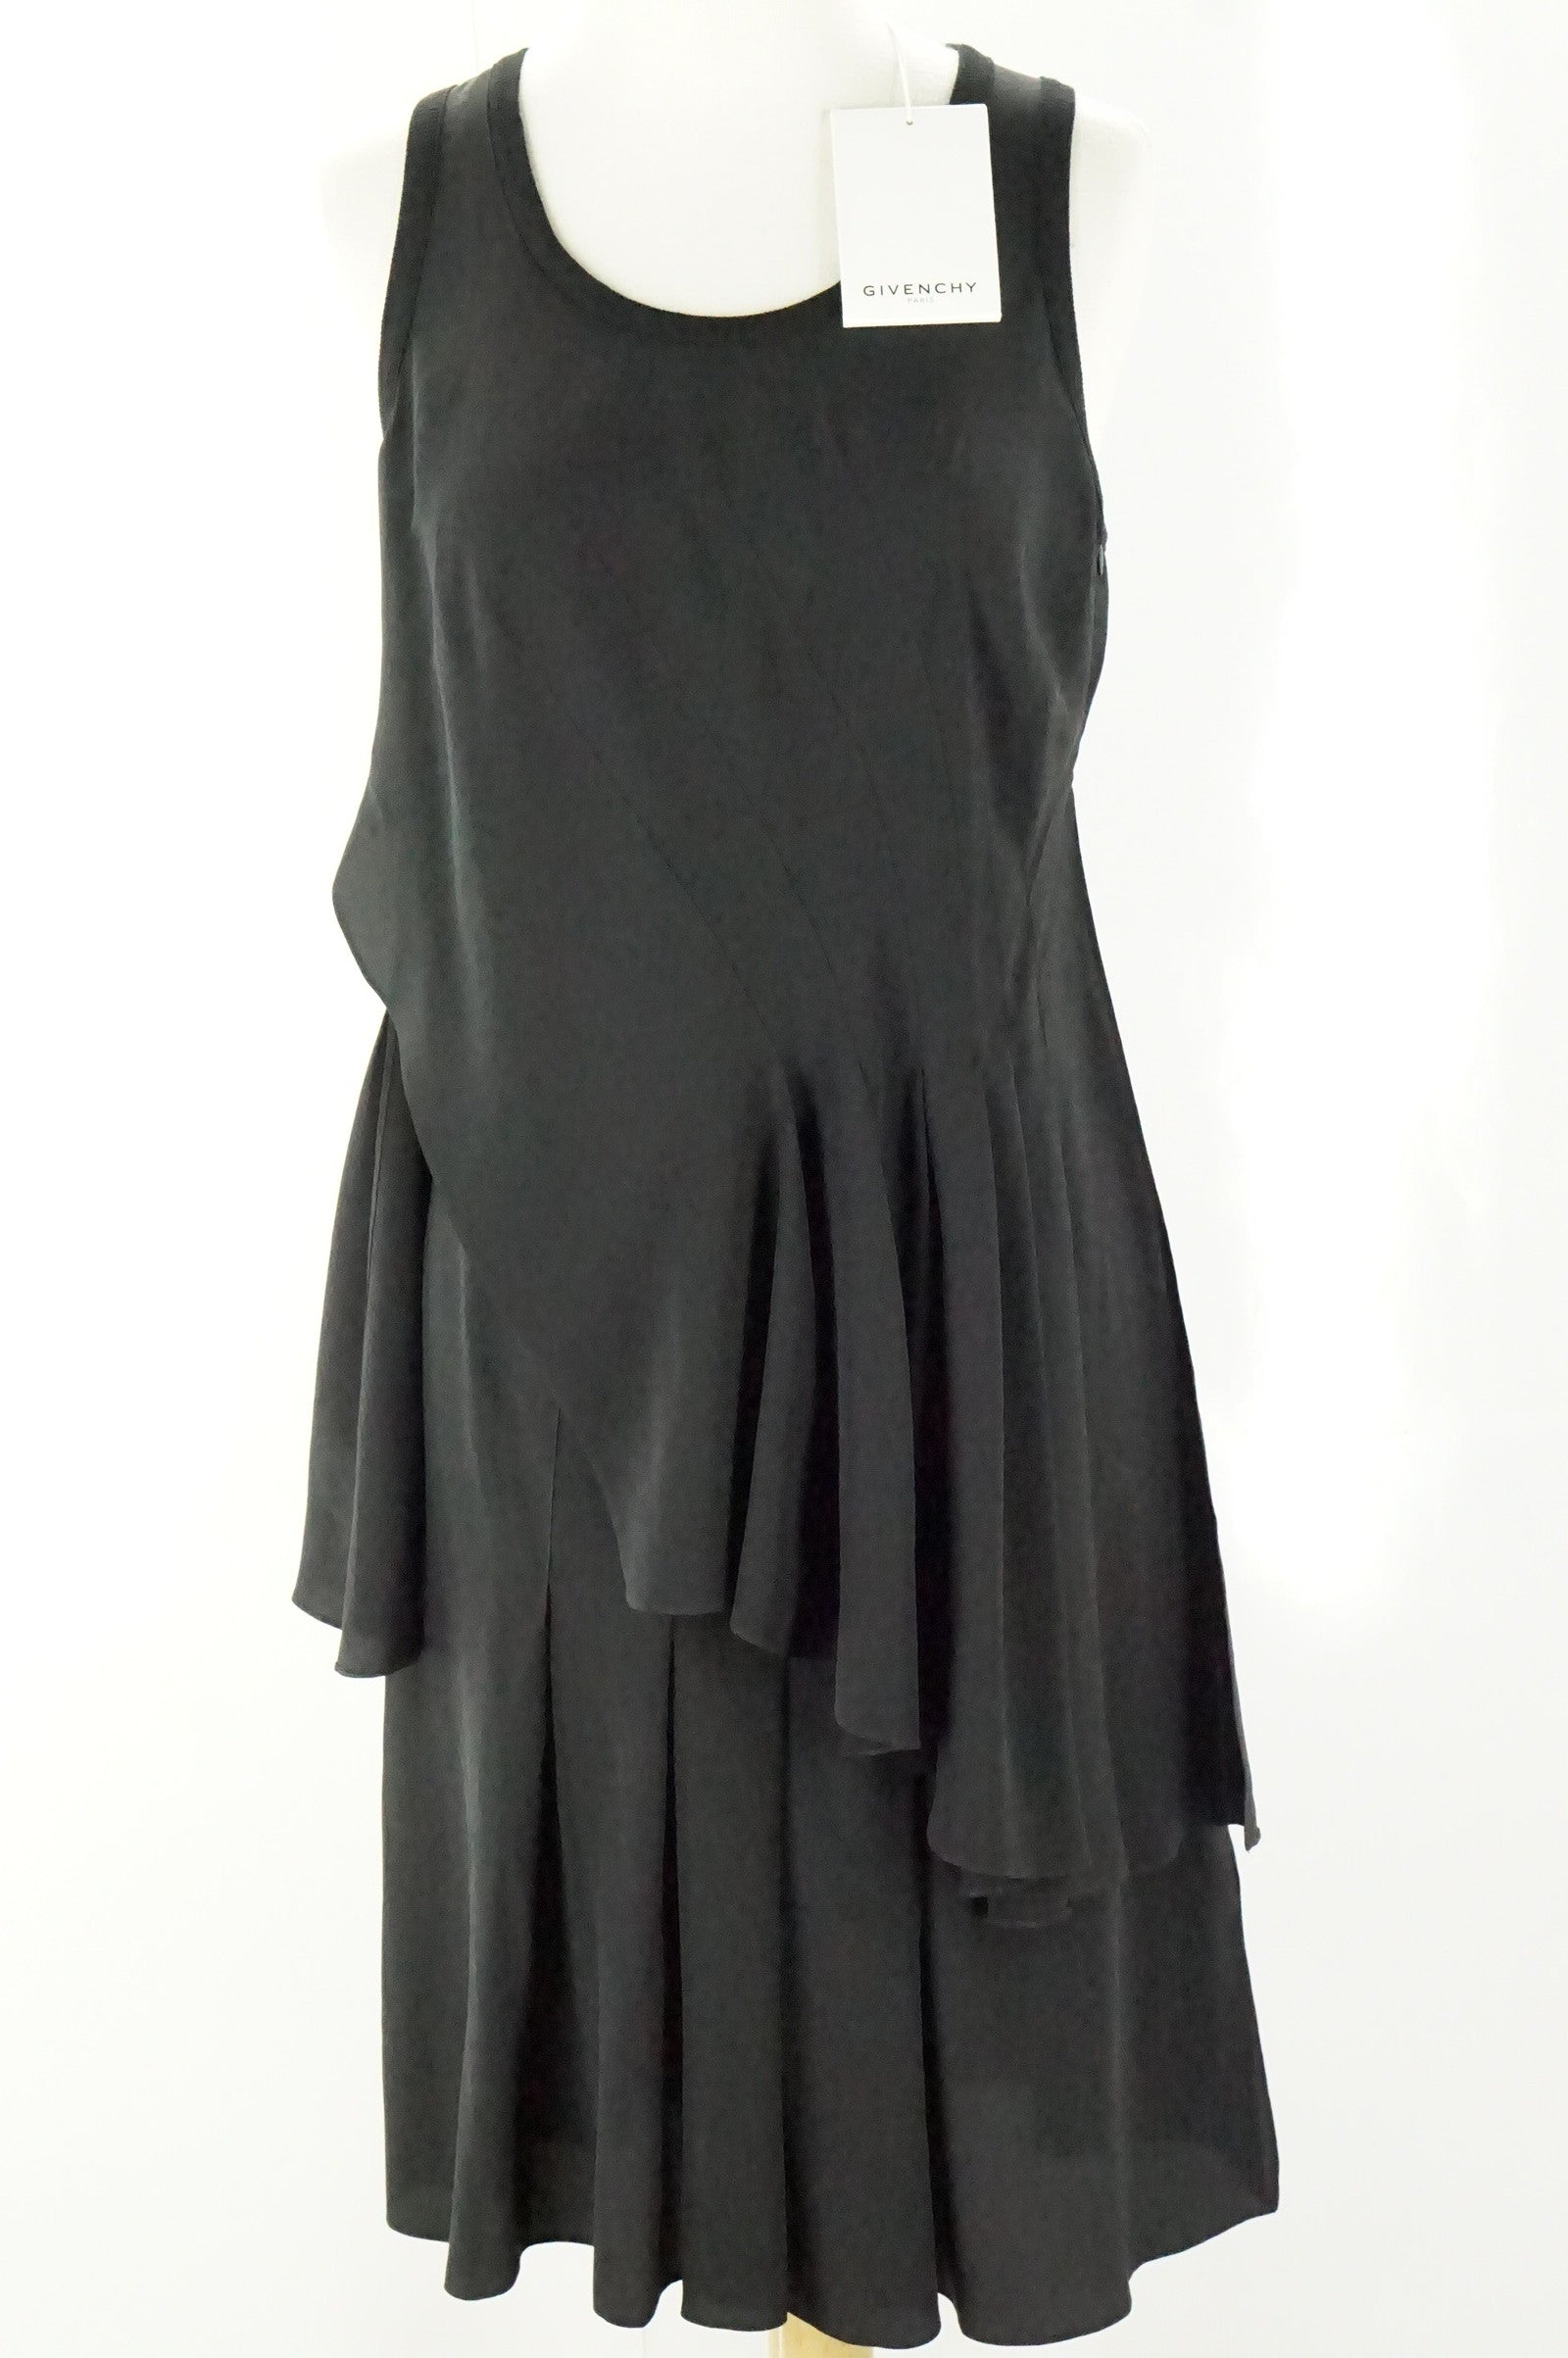 Givenchy Black Silk Tiered Pleated Sleeveless Dress SZ 38 FR 6 US New $1990